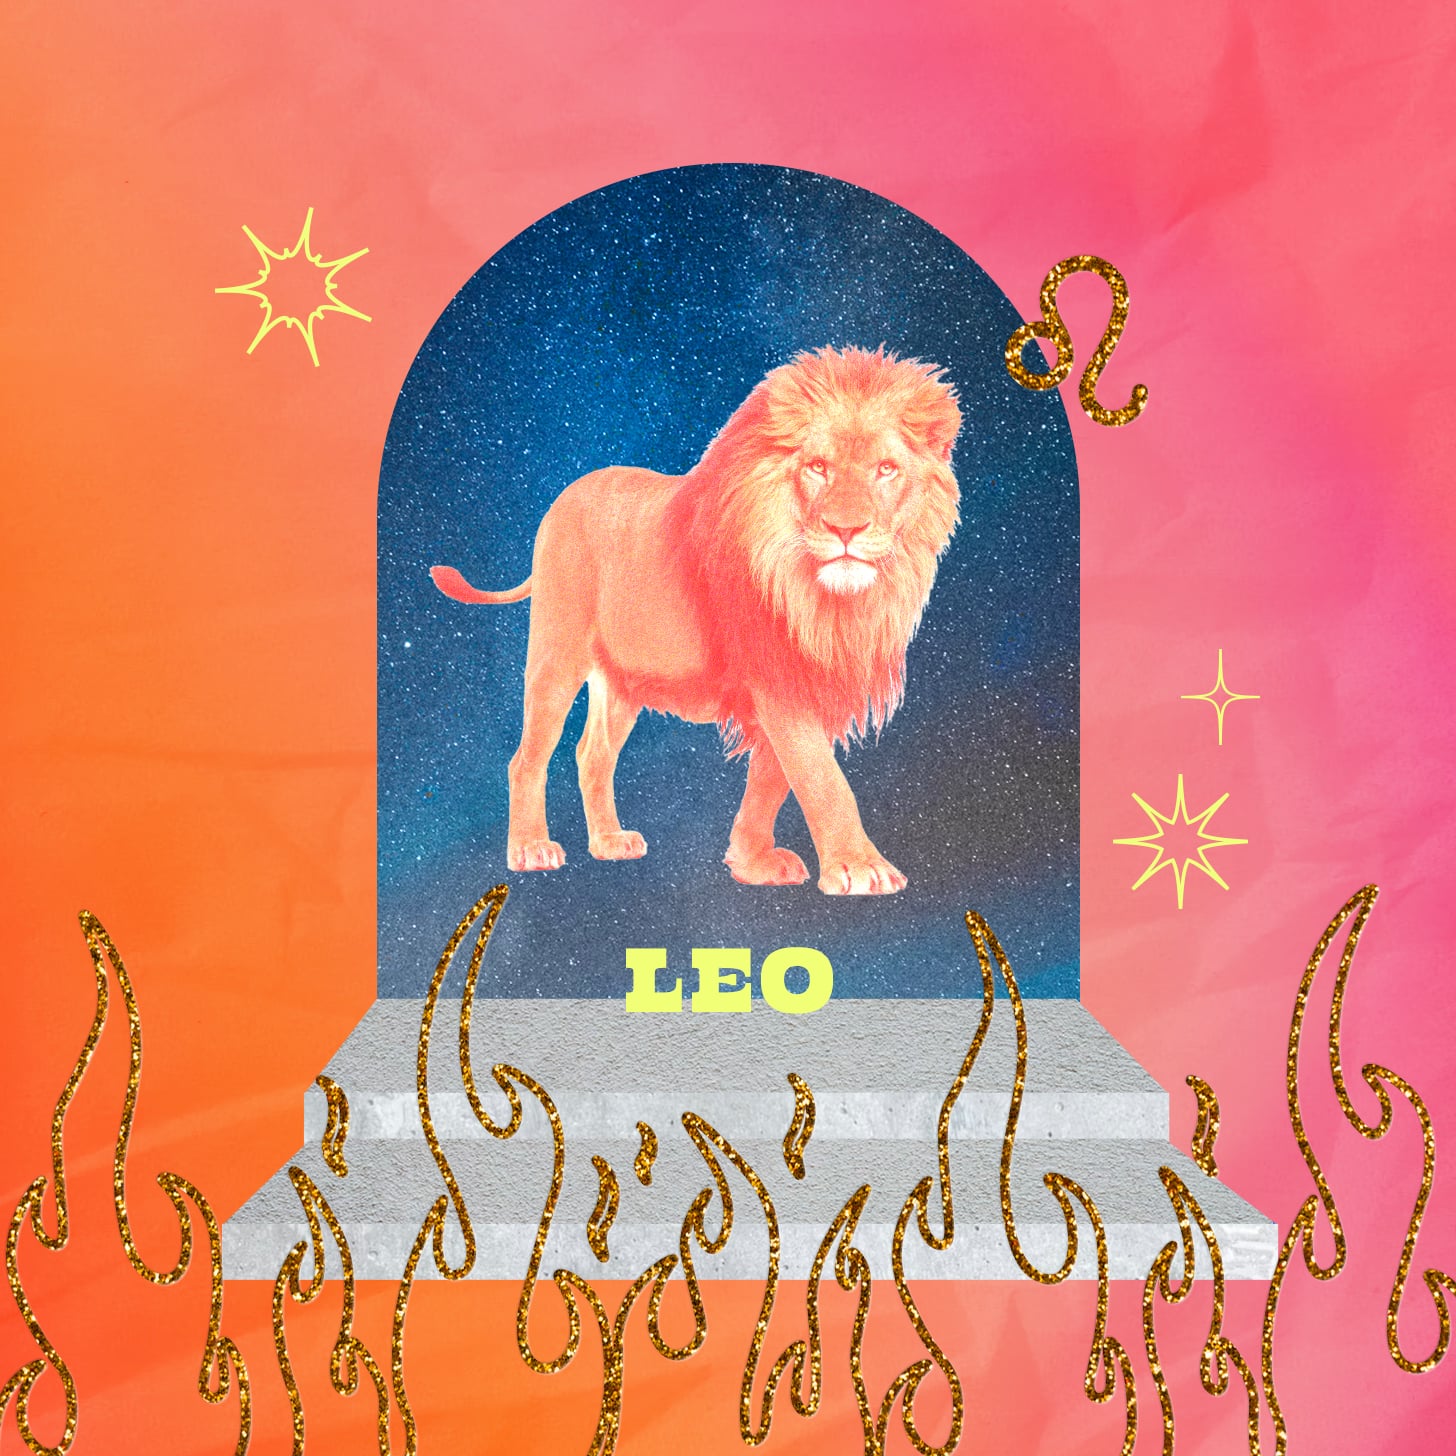 Leo weekly horoscope for December 4, 2022